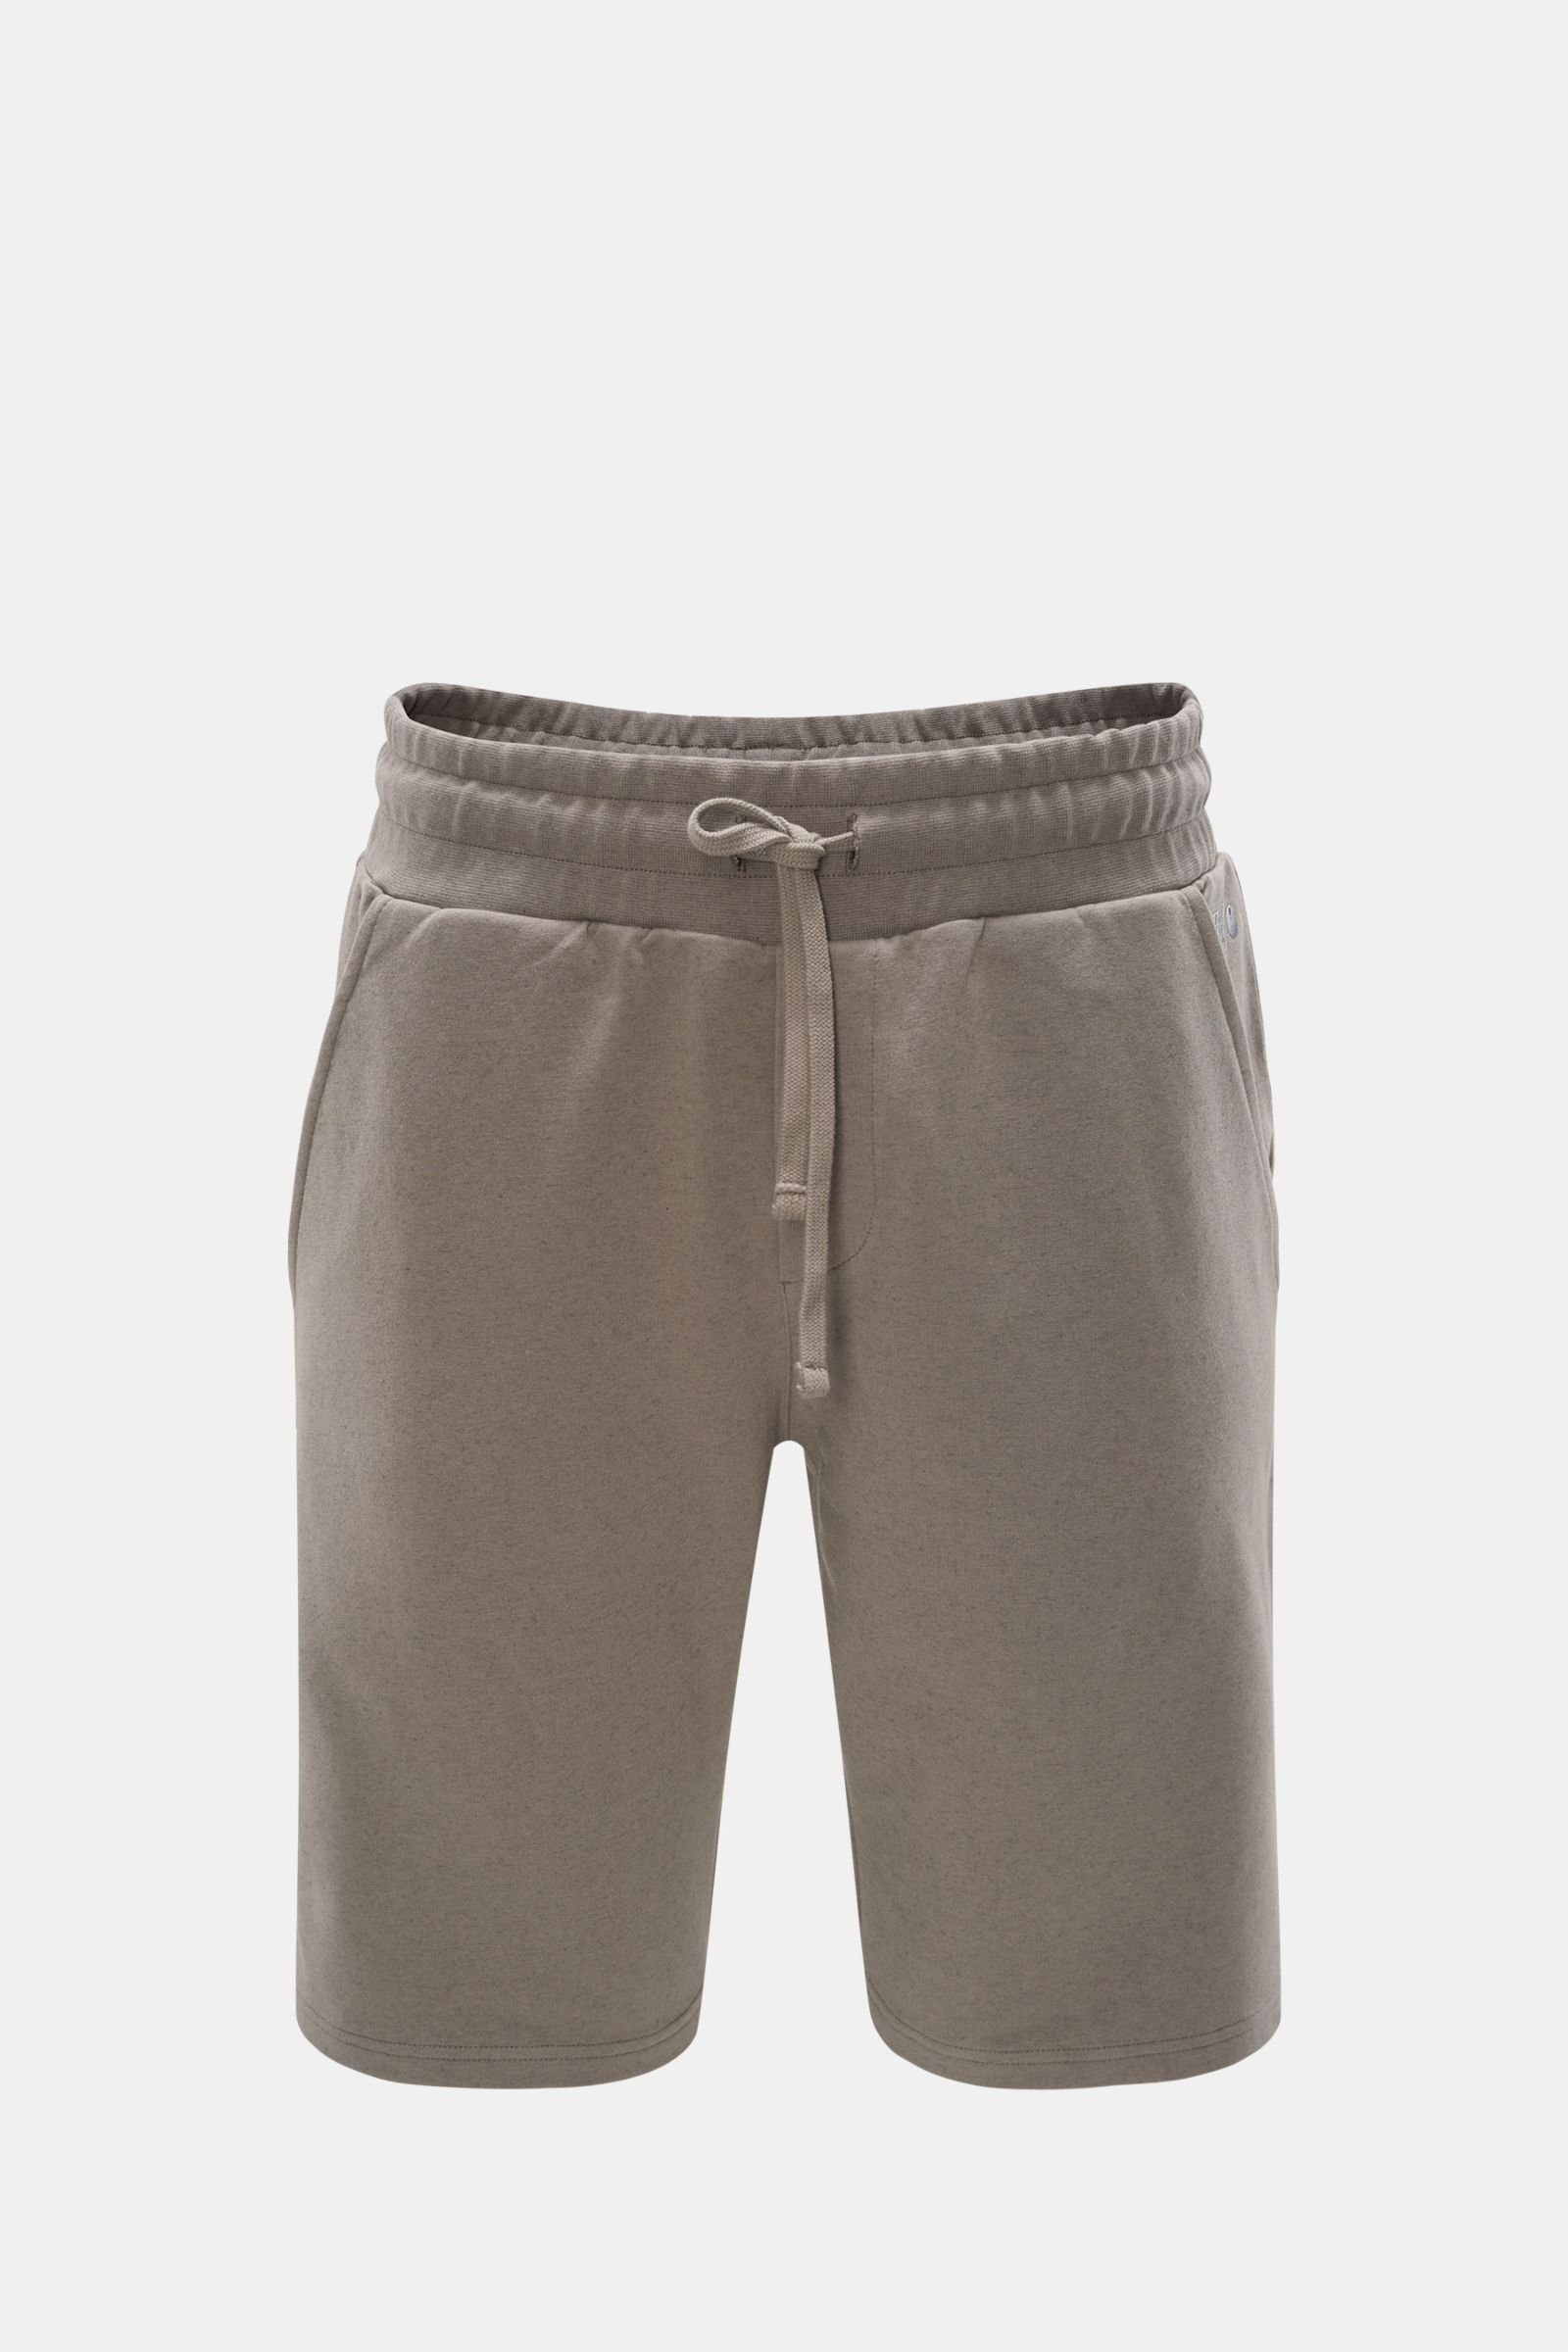 Sweat shorts grey-brown